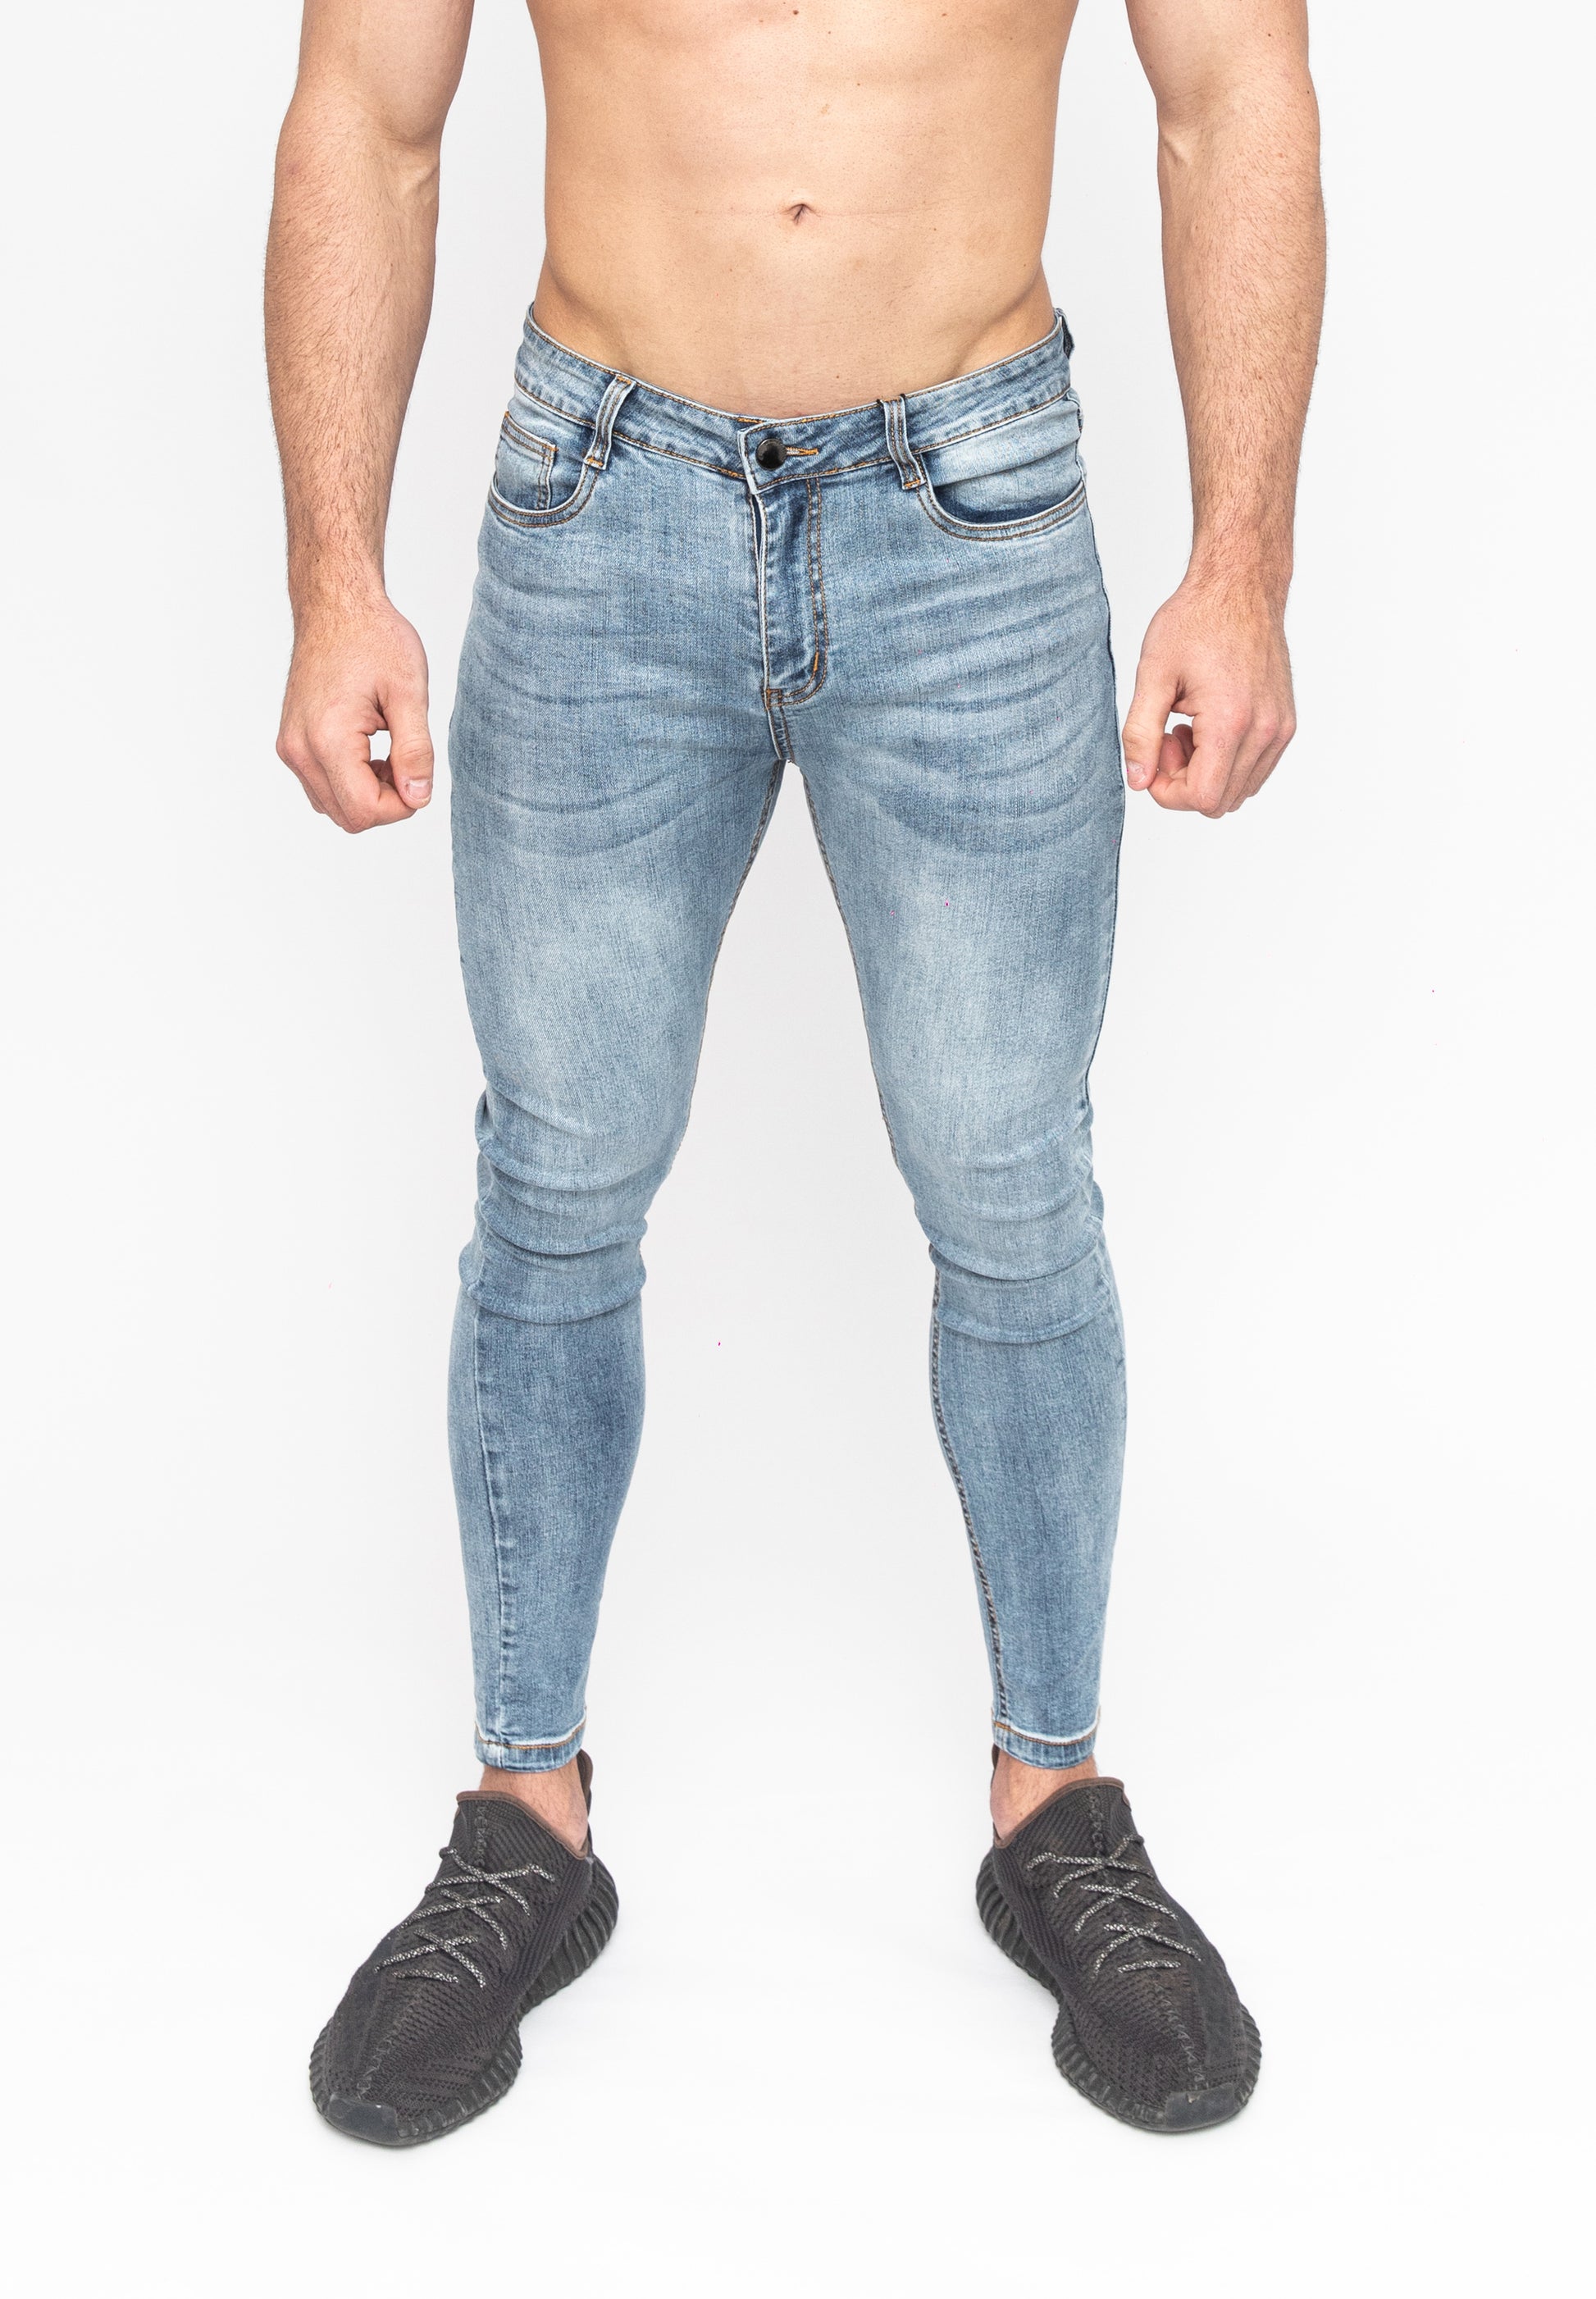 Men's Blue Skinny Fit Stretch Jeans Pants Front